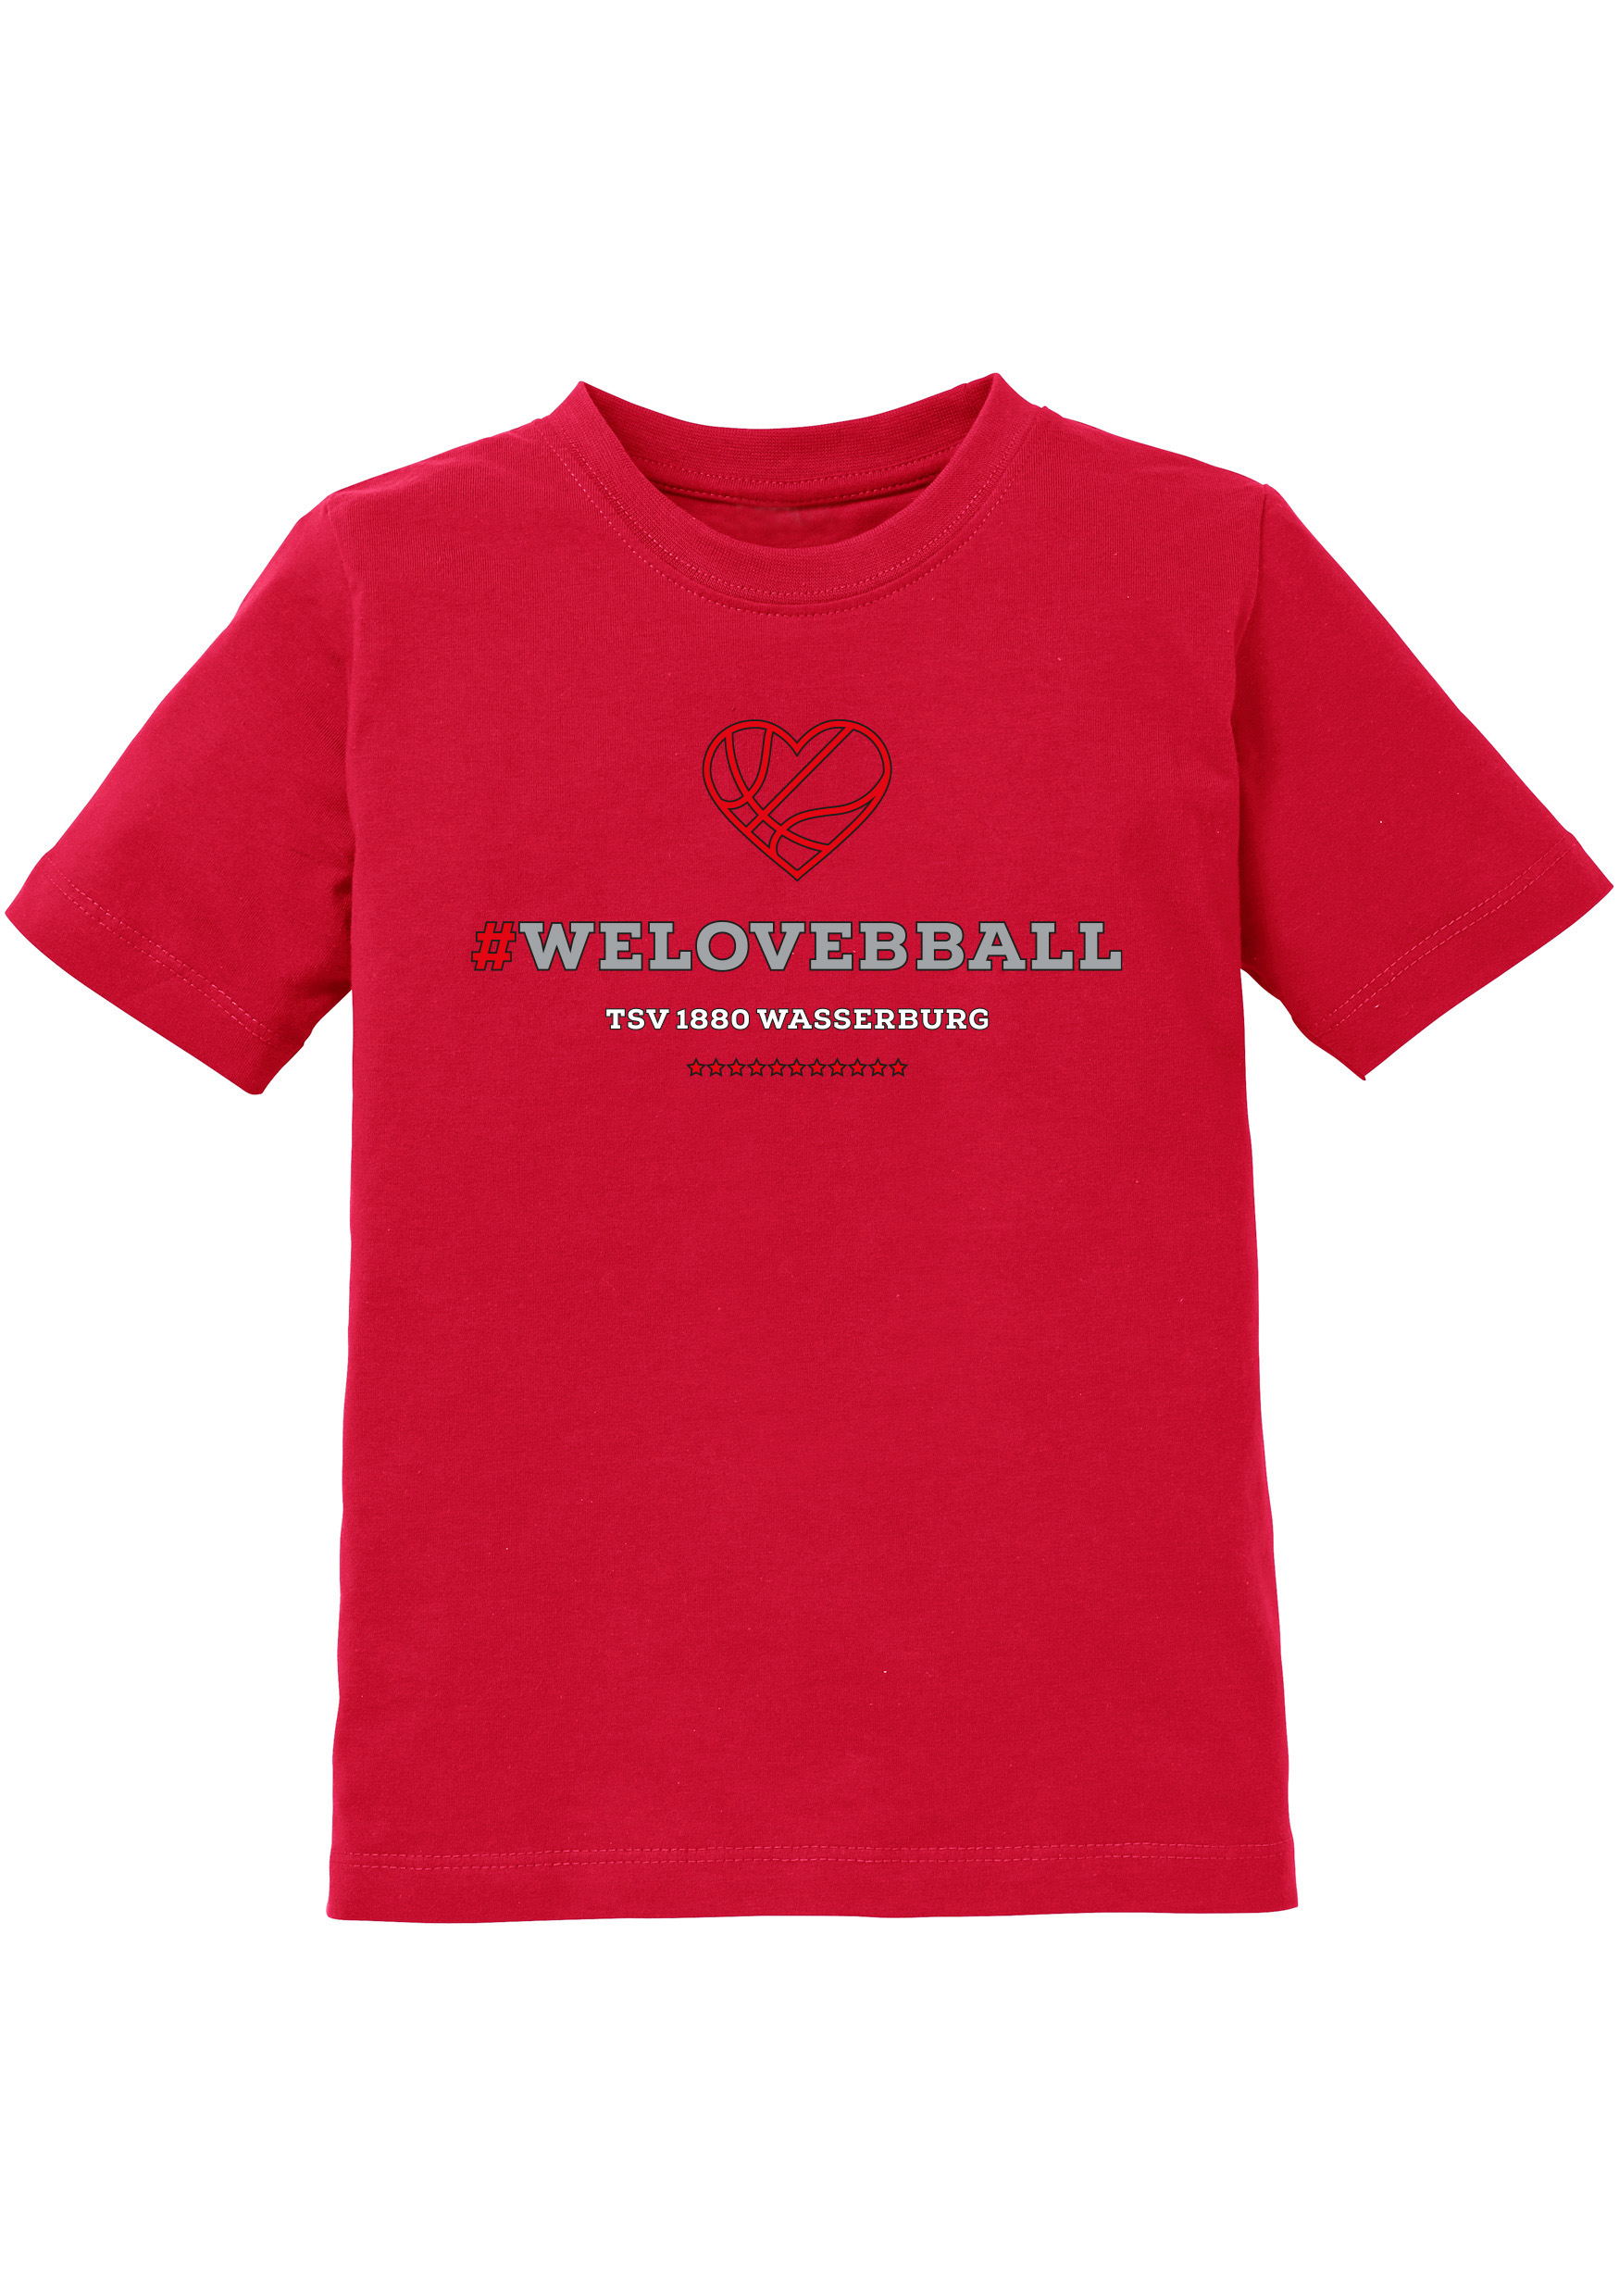 TSV 1880 Wasserburg T-Shirt Kids